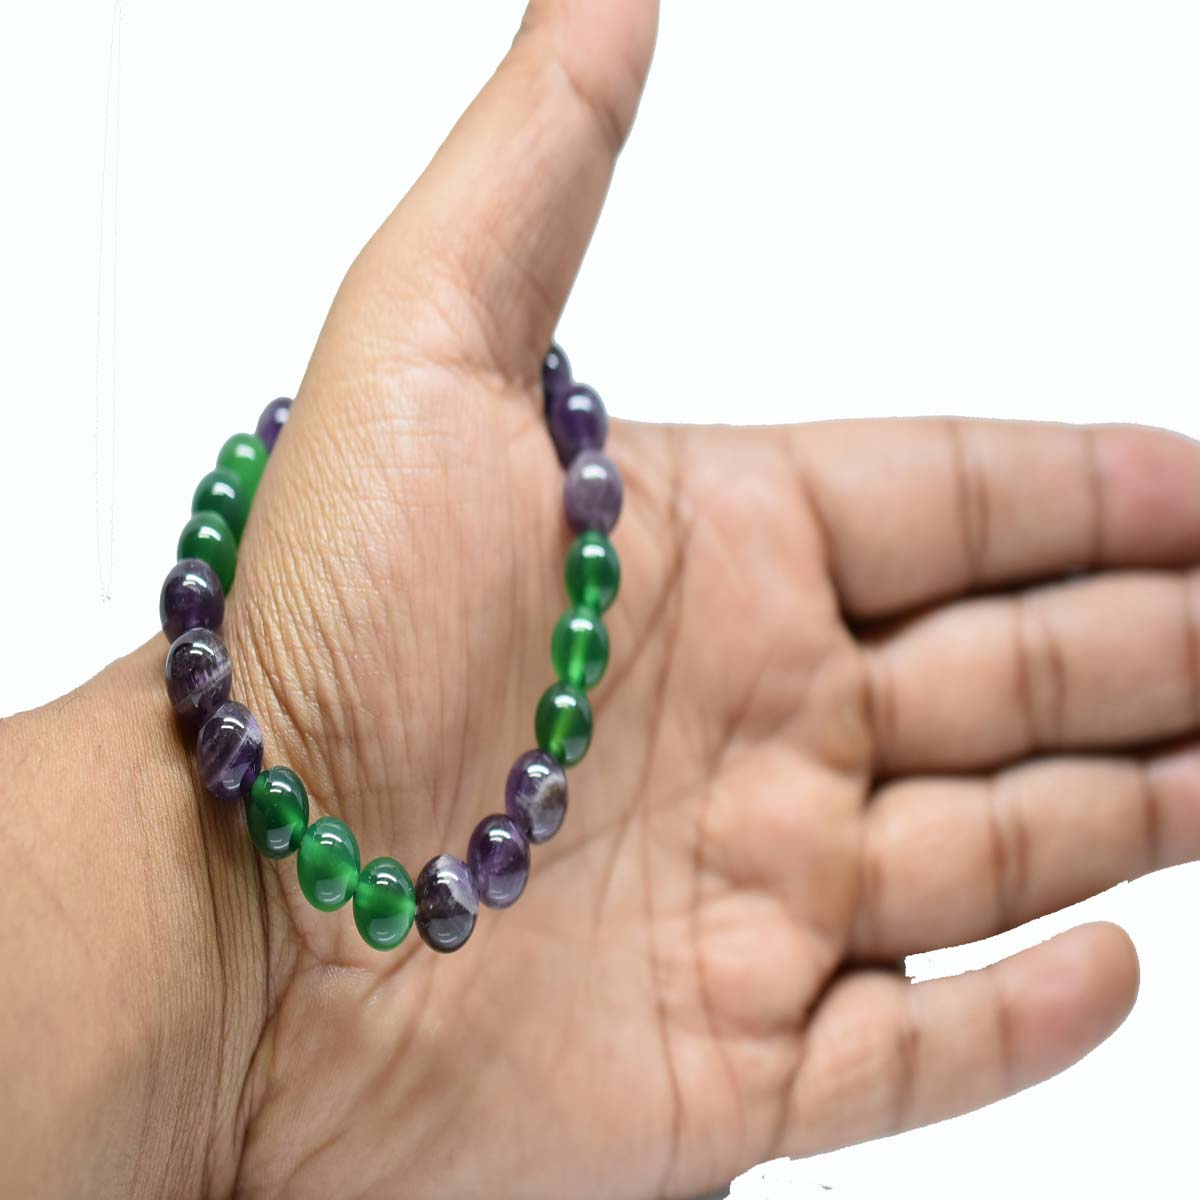 Mens Jade Bracelets  Jade Jewelry For Men  RealJade Authenticity is  timeless  RealJade Co